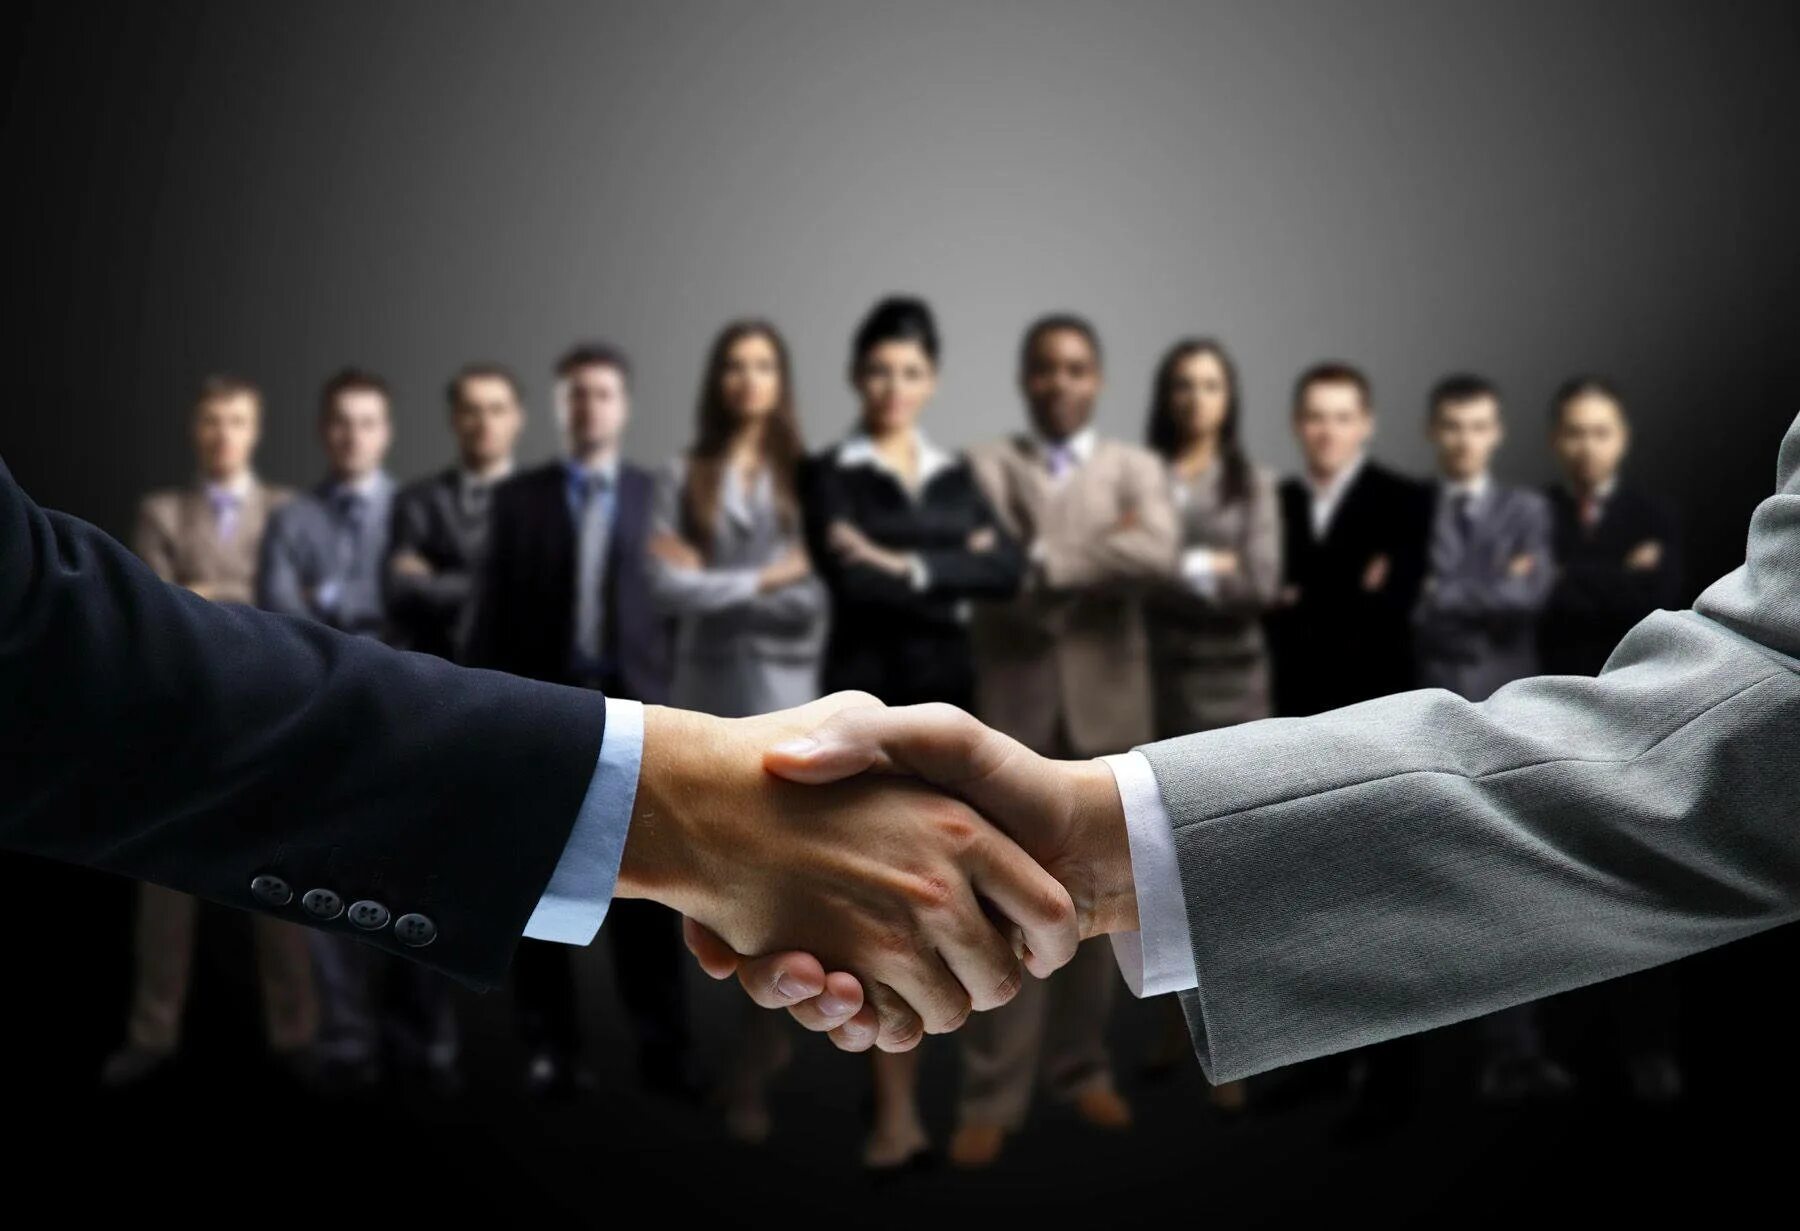 Client handshake. Партнерство в бизнесе. Сотрудничество в коллективе. Бизнес сотрудничество. Сотрудничество с партнерами.